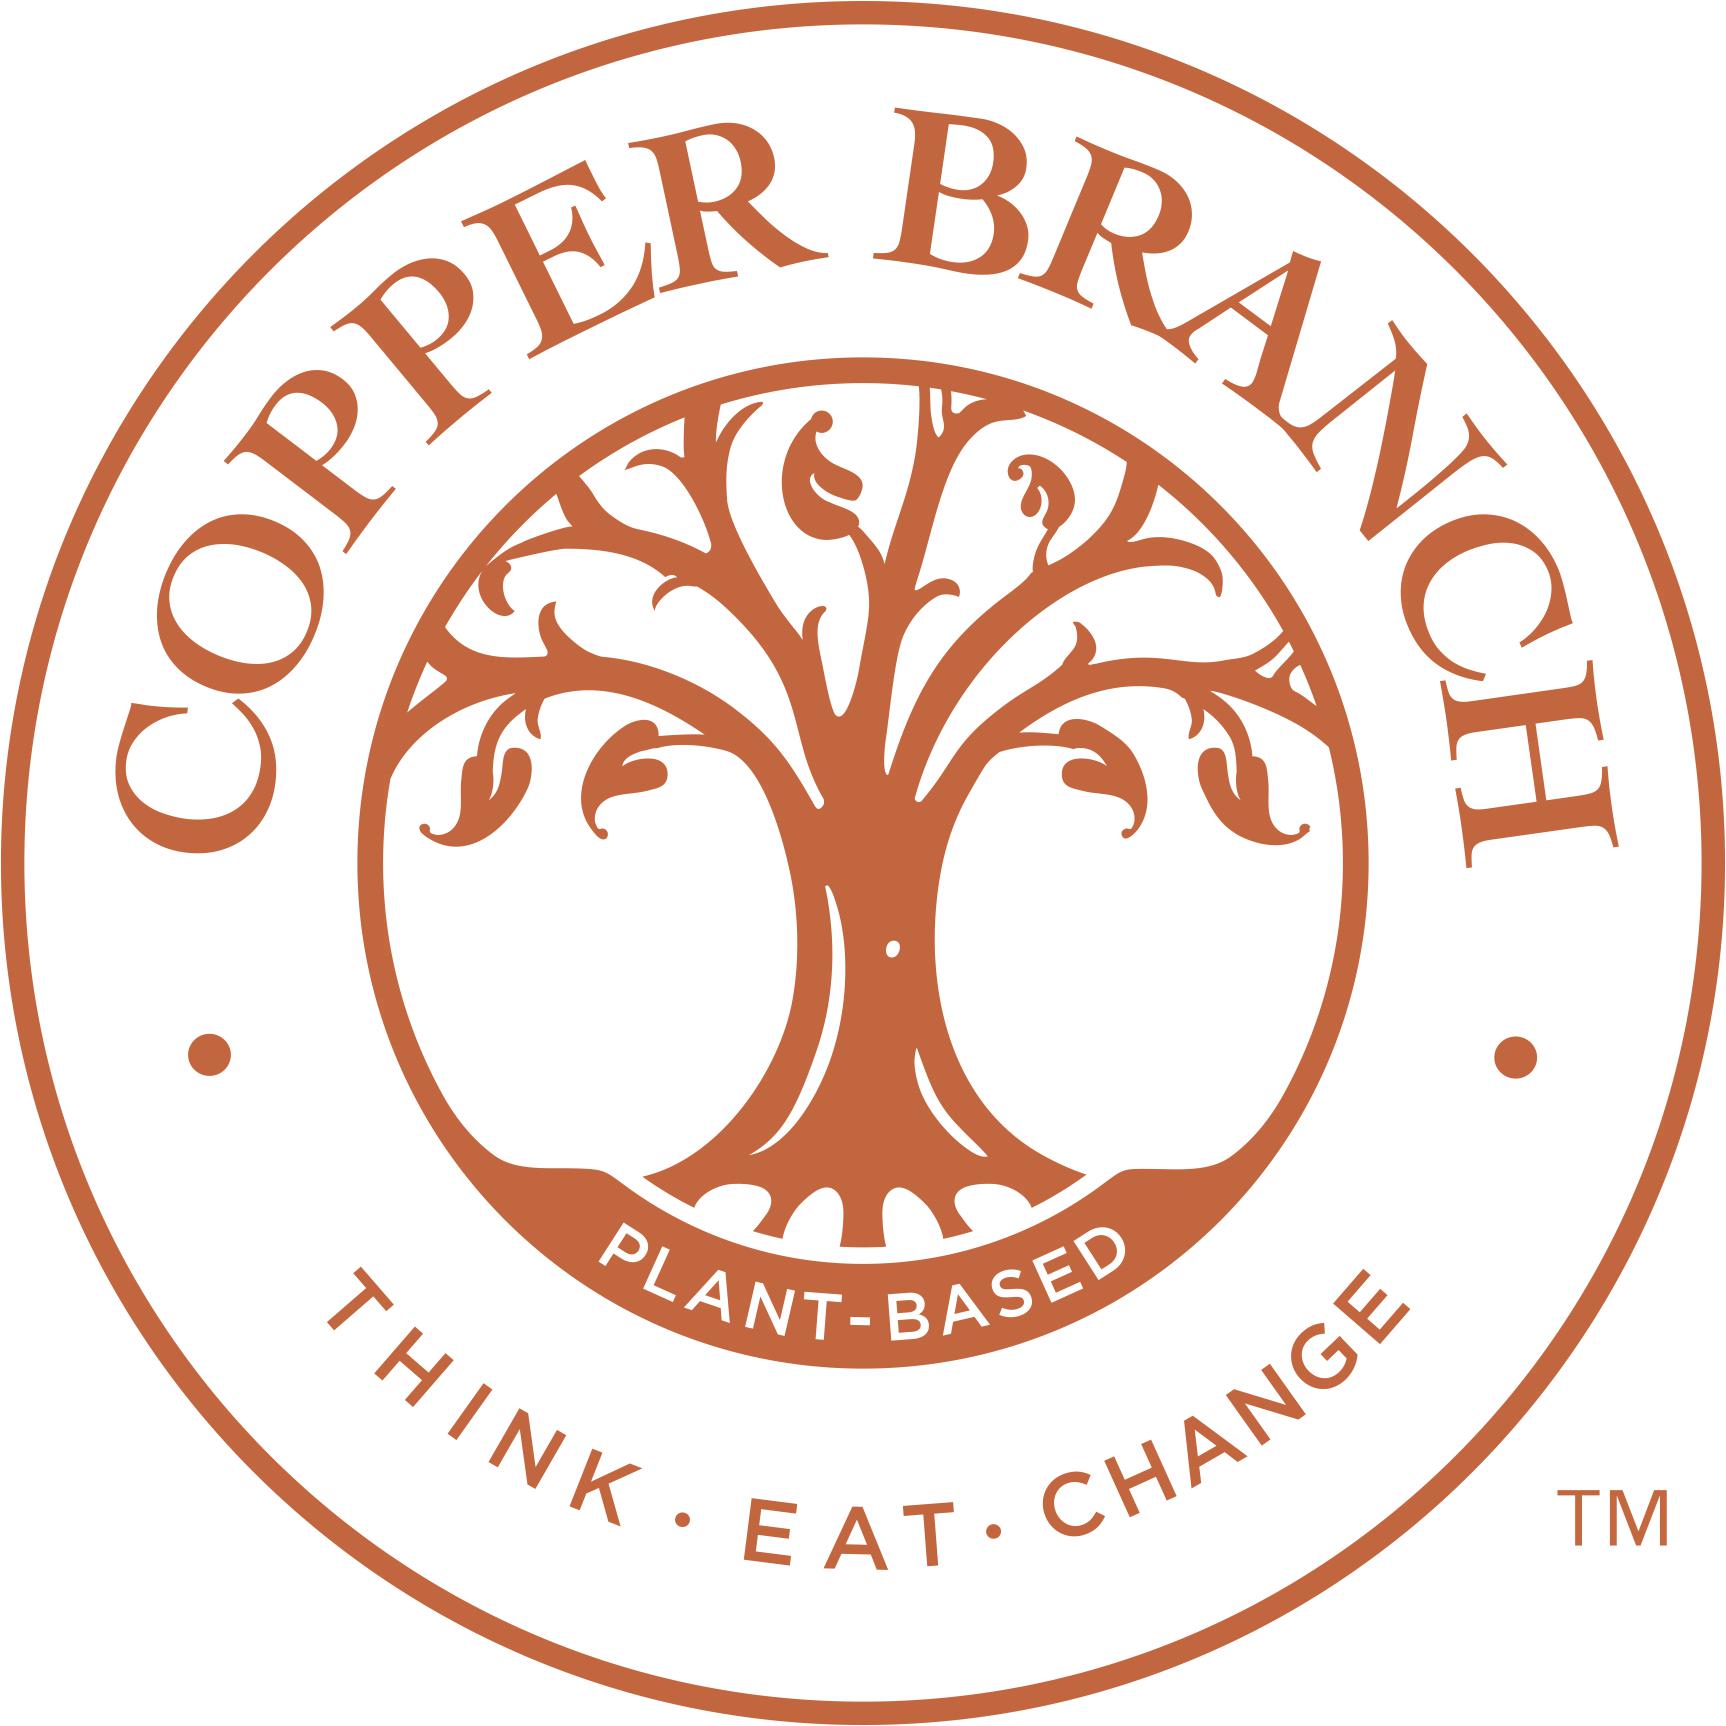 Copper Branch Nashville